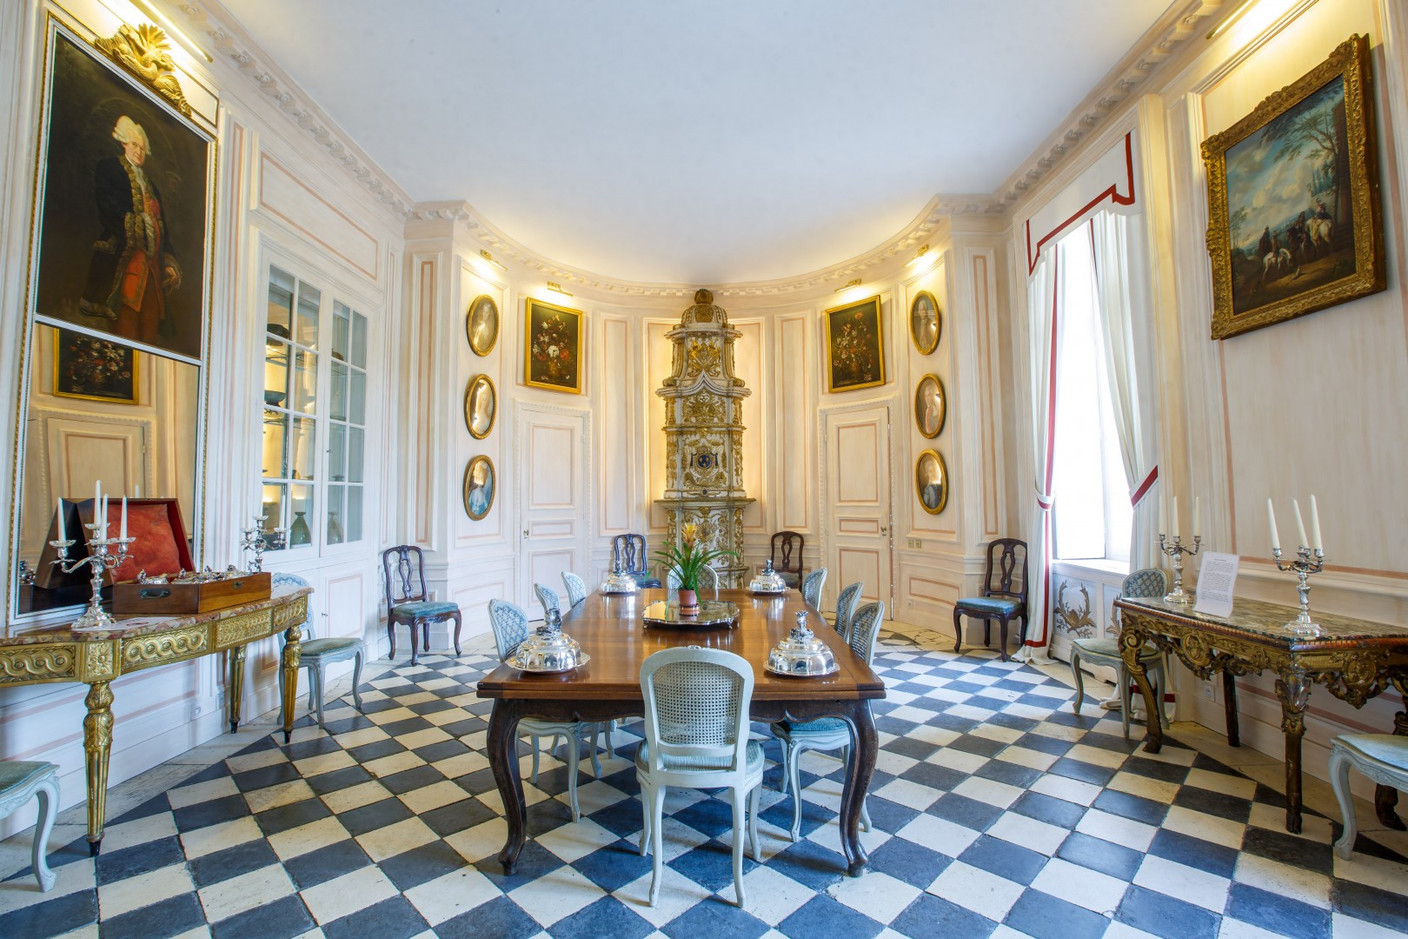 The dining room. (Photo: Château de Lagrange)